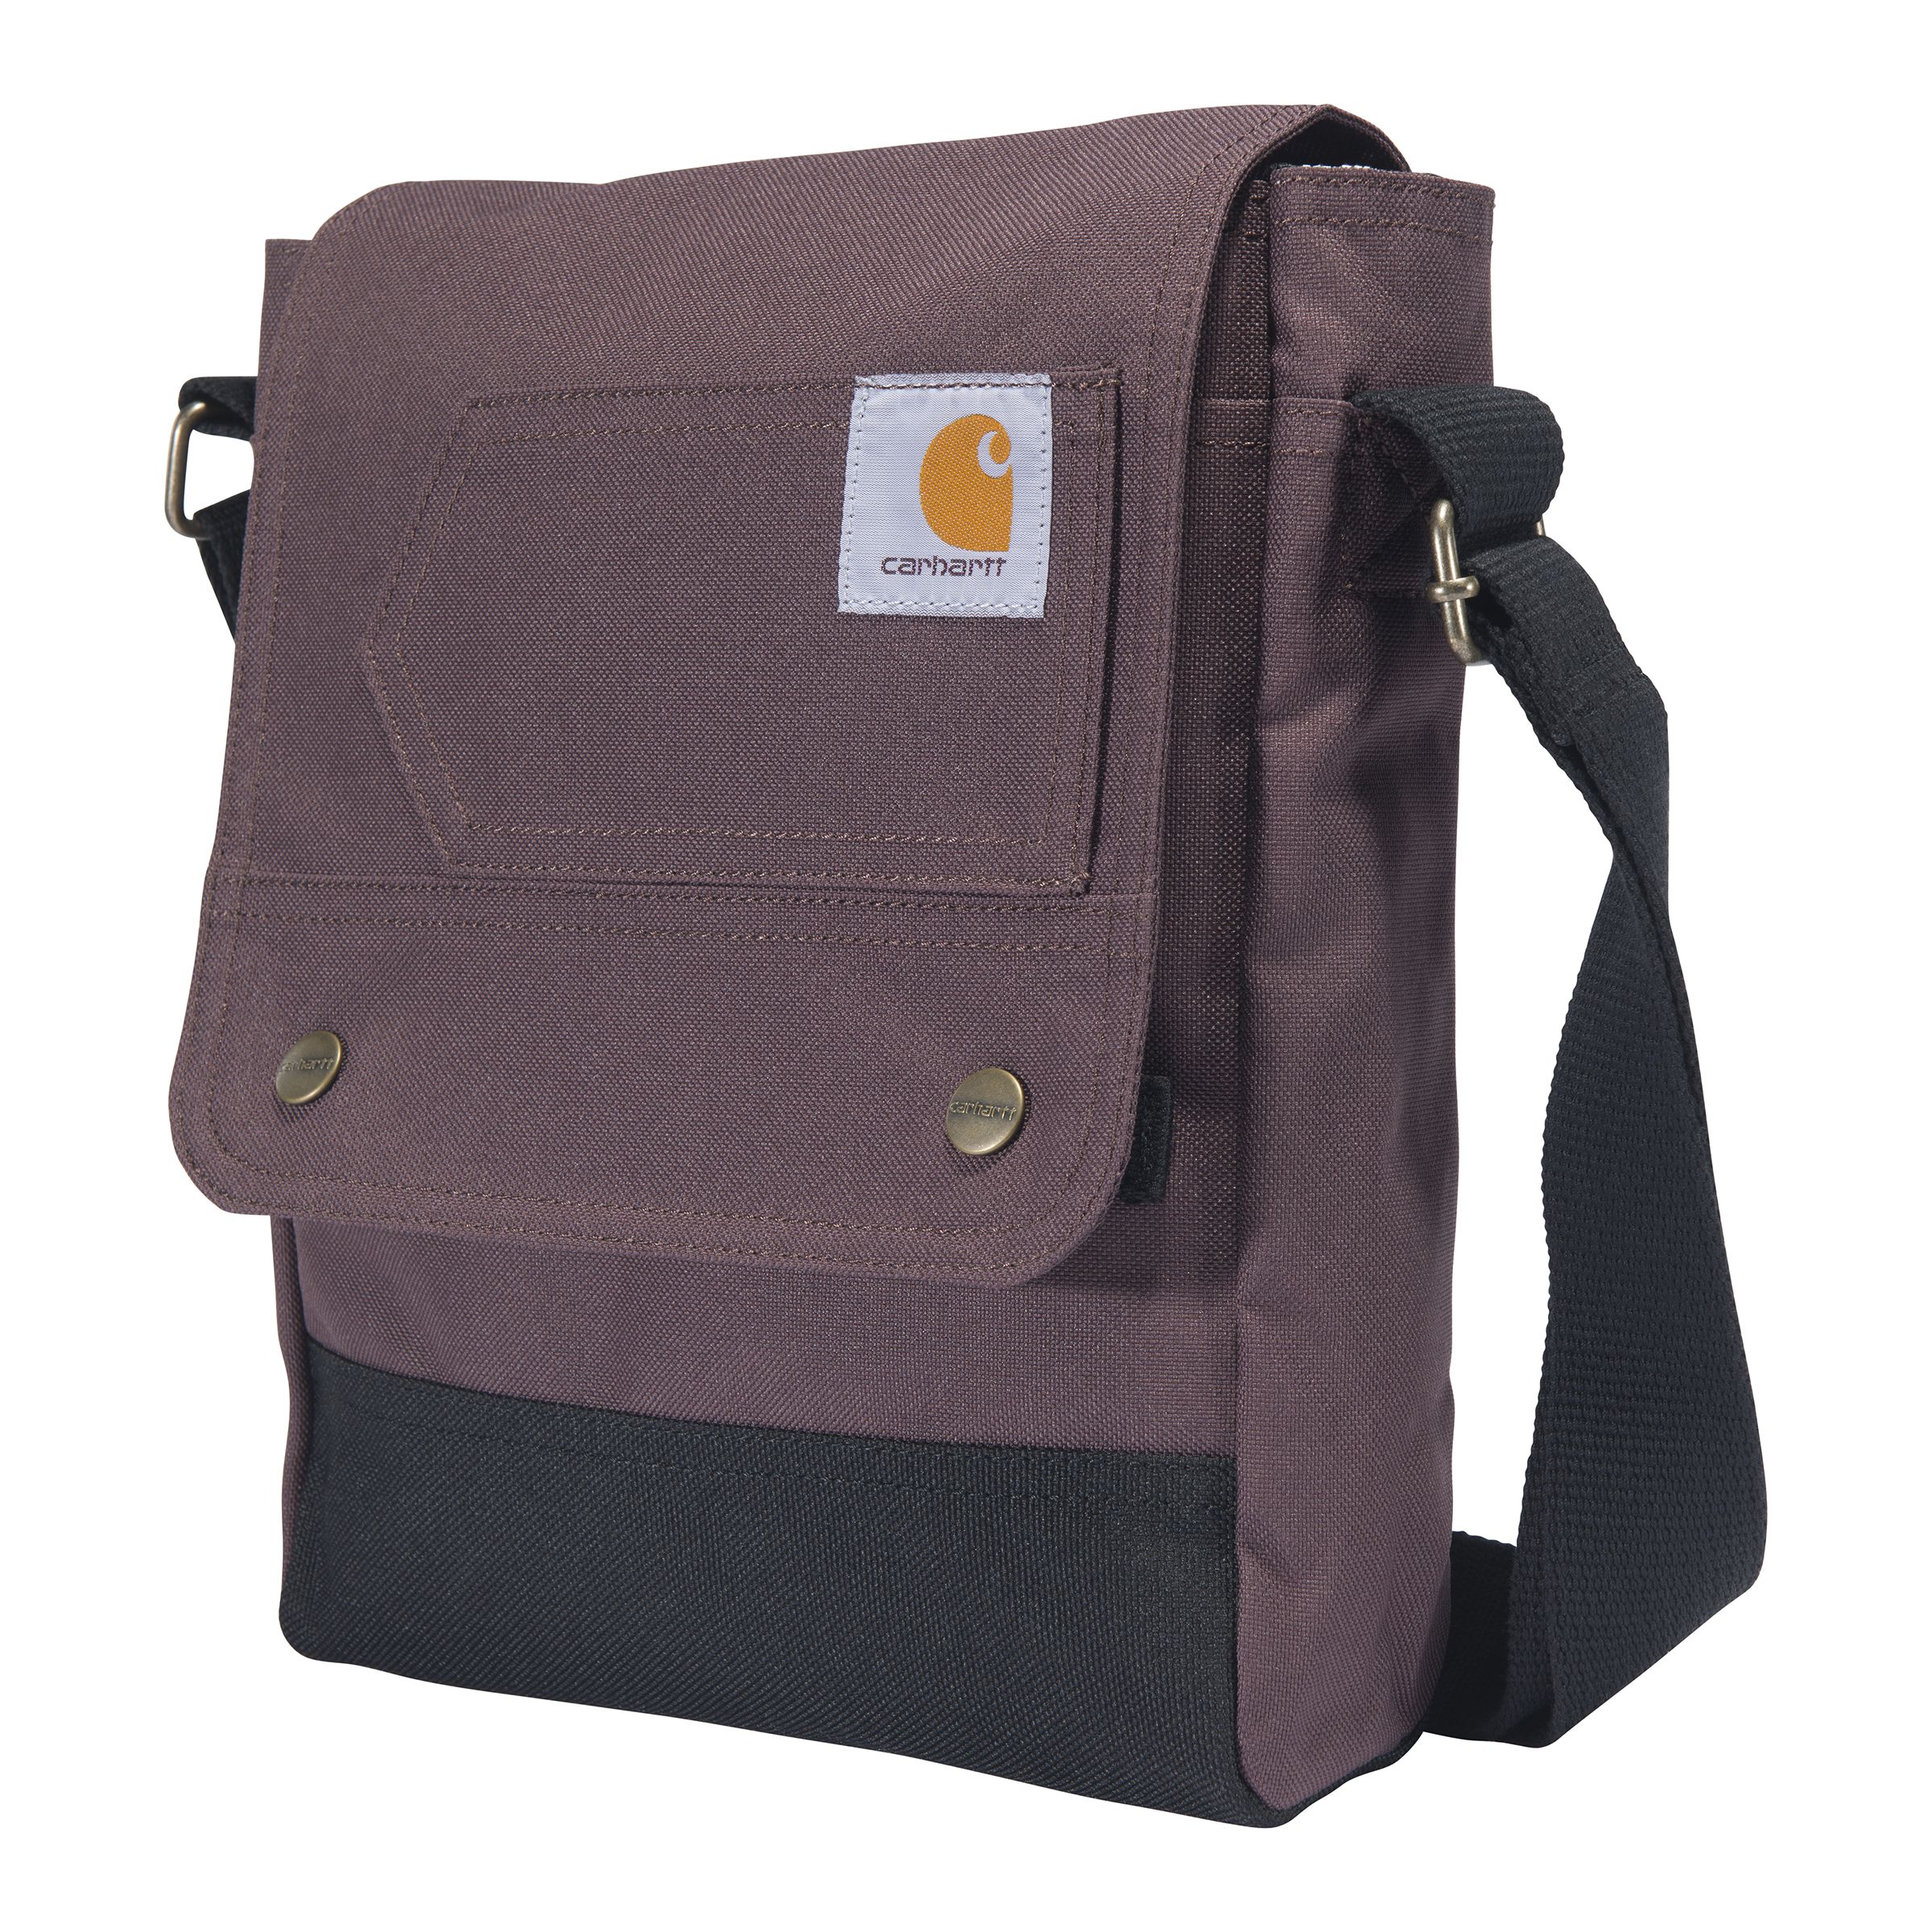 Carhartt, Durable, Adjustable Crossbody Bag With Flap Over Snap Closure